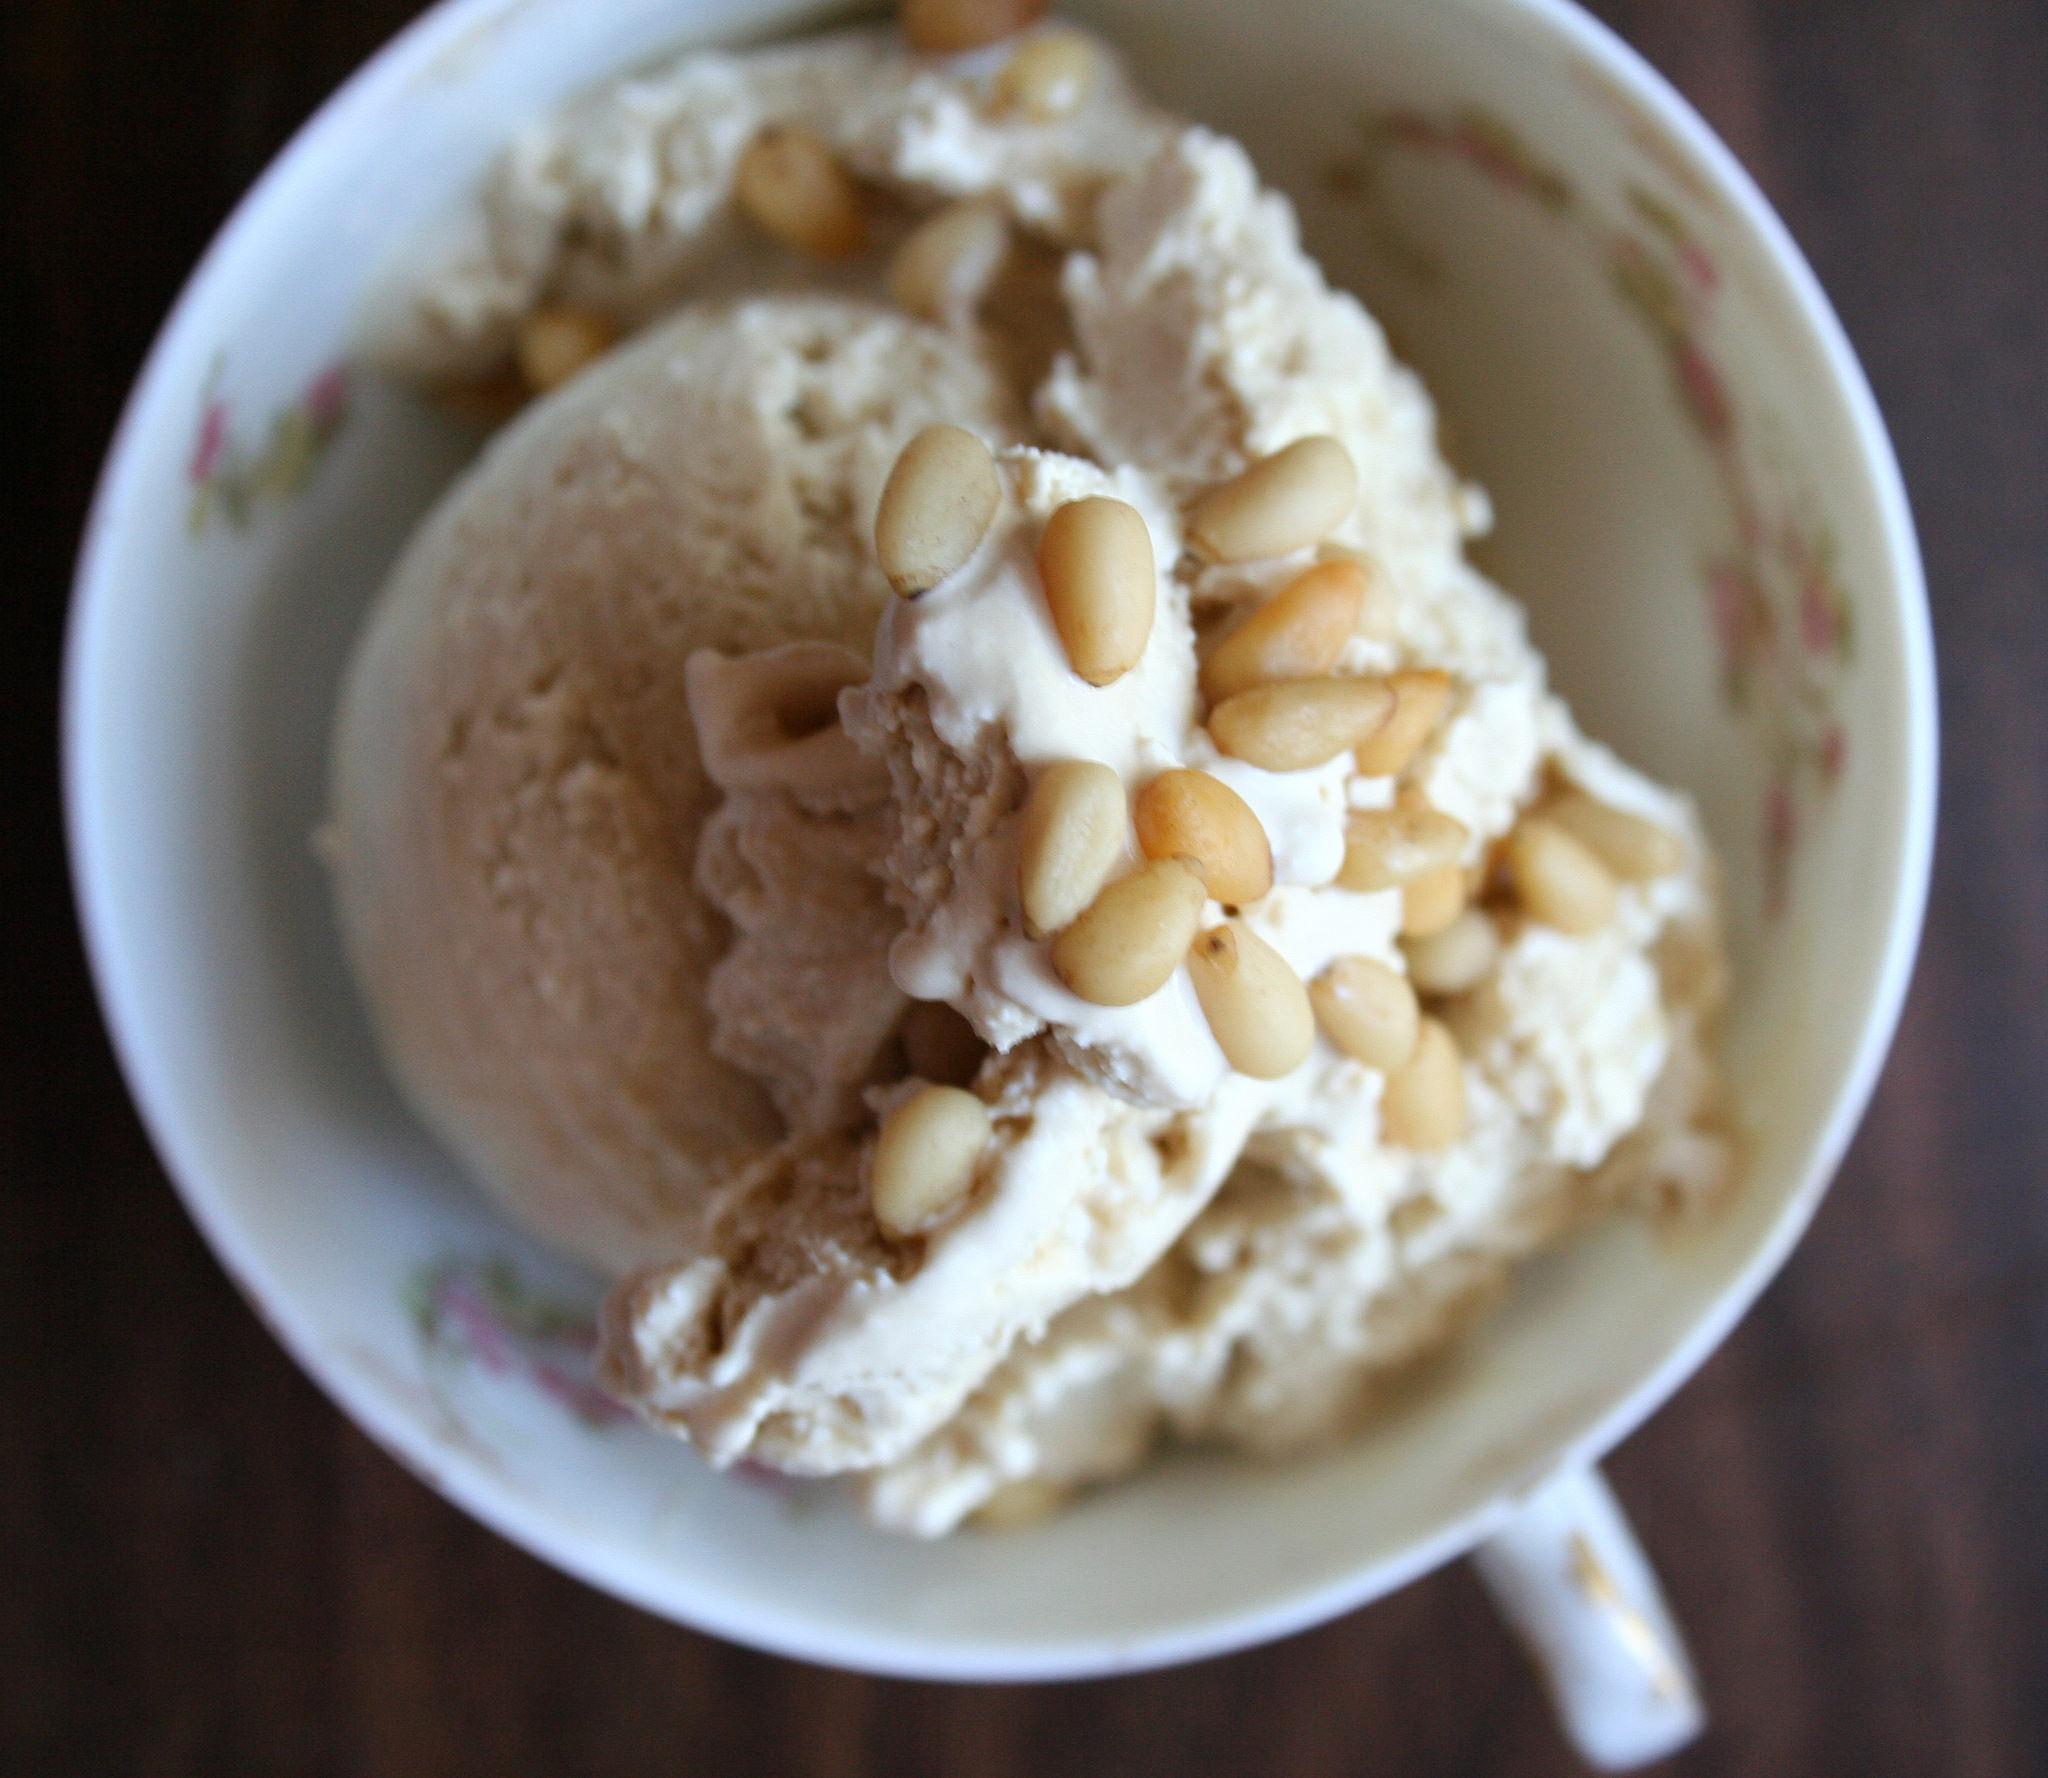 Hard ice cream with pine nuts